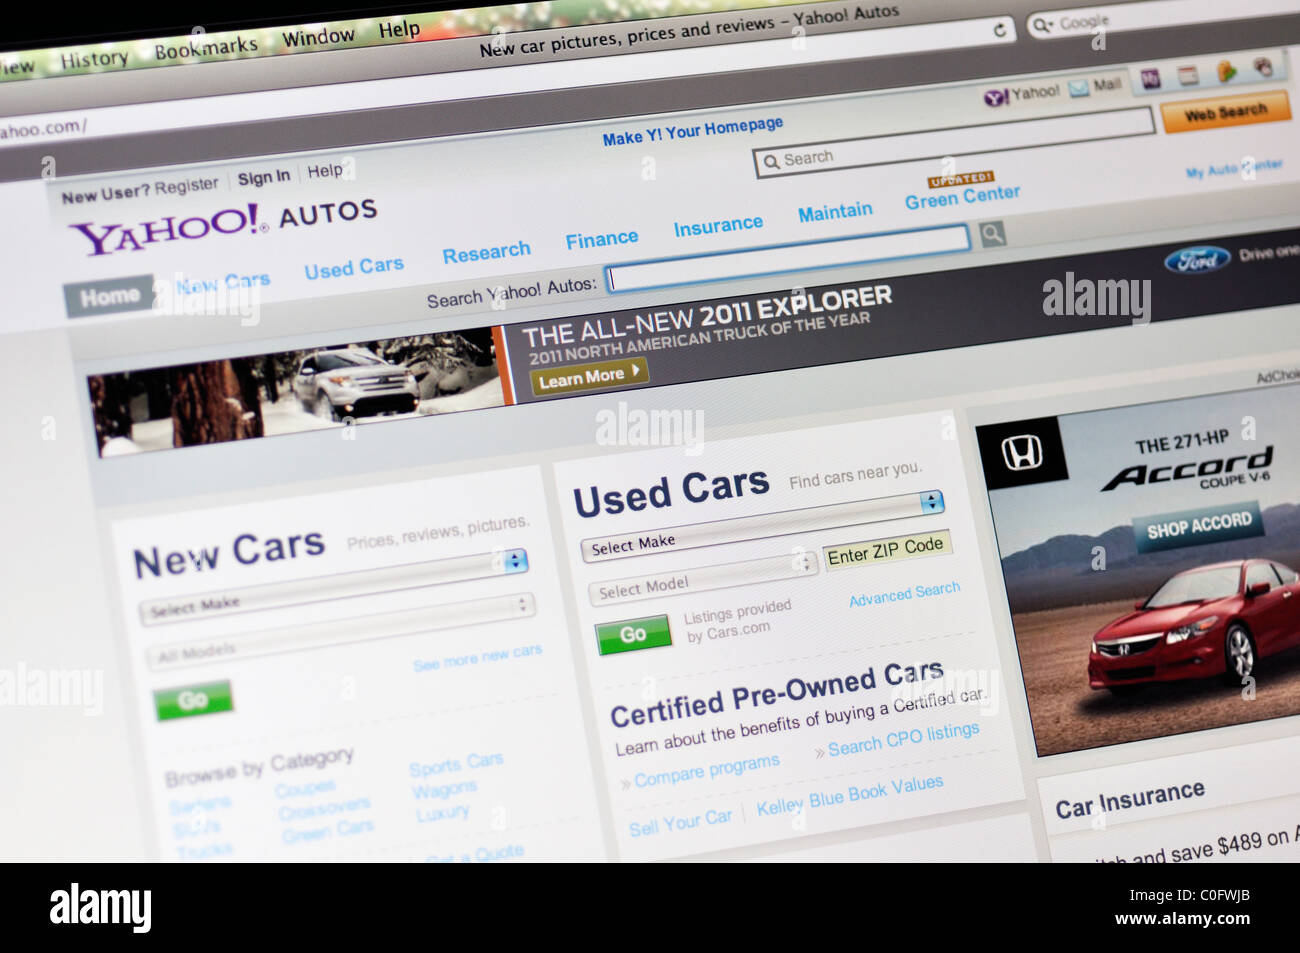 Yahoo Autos website Stock Photo